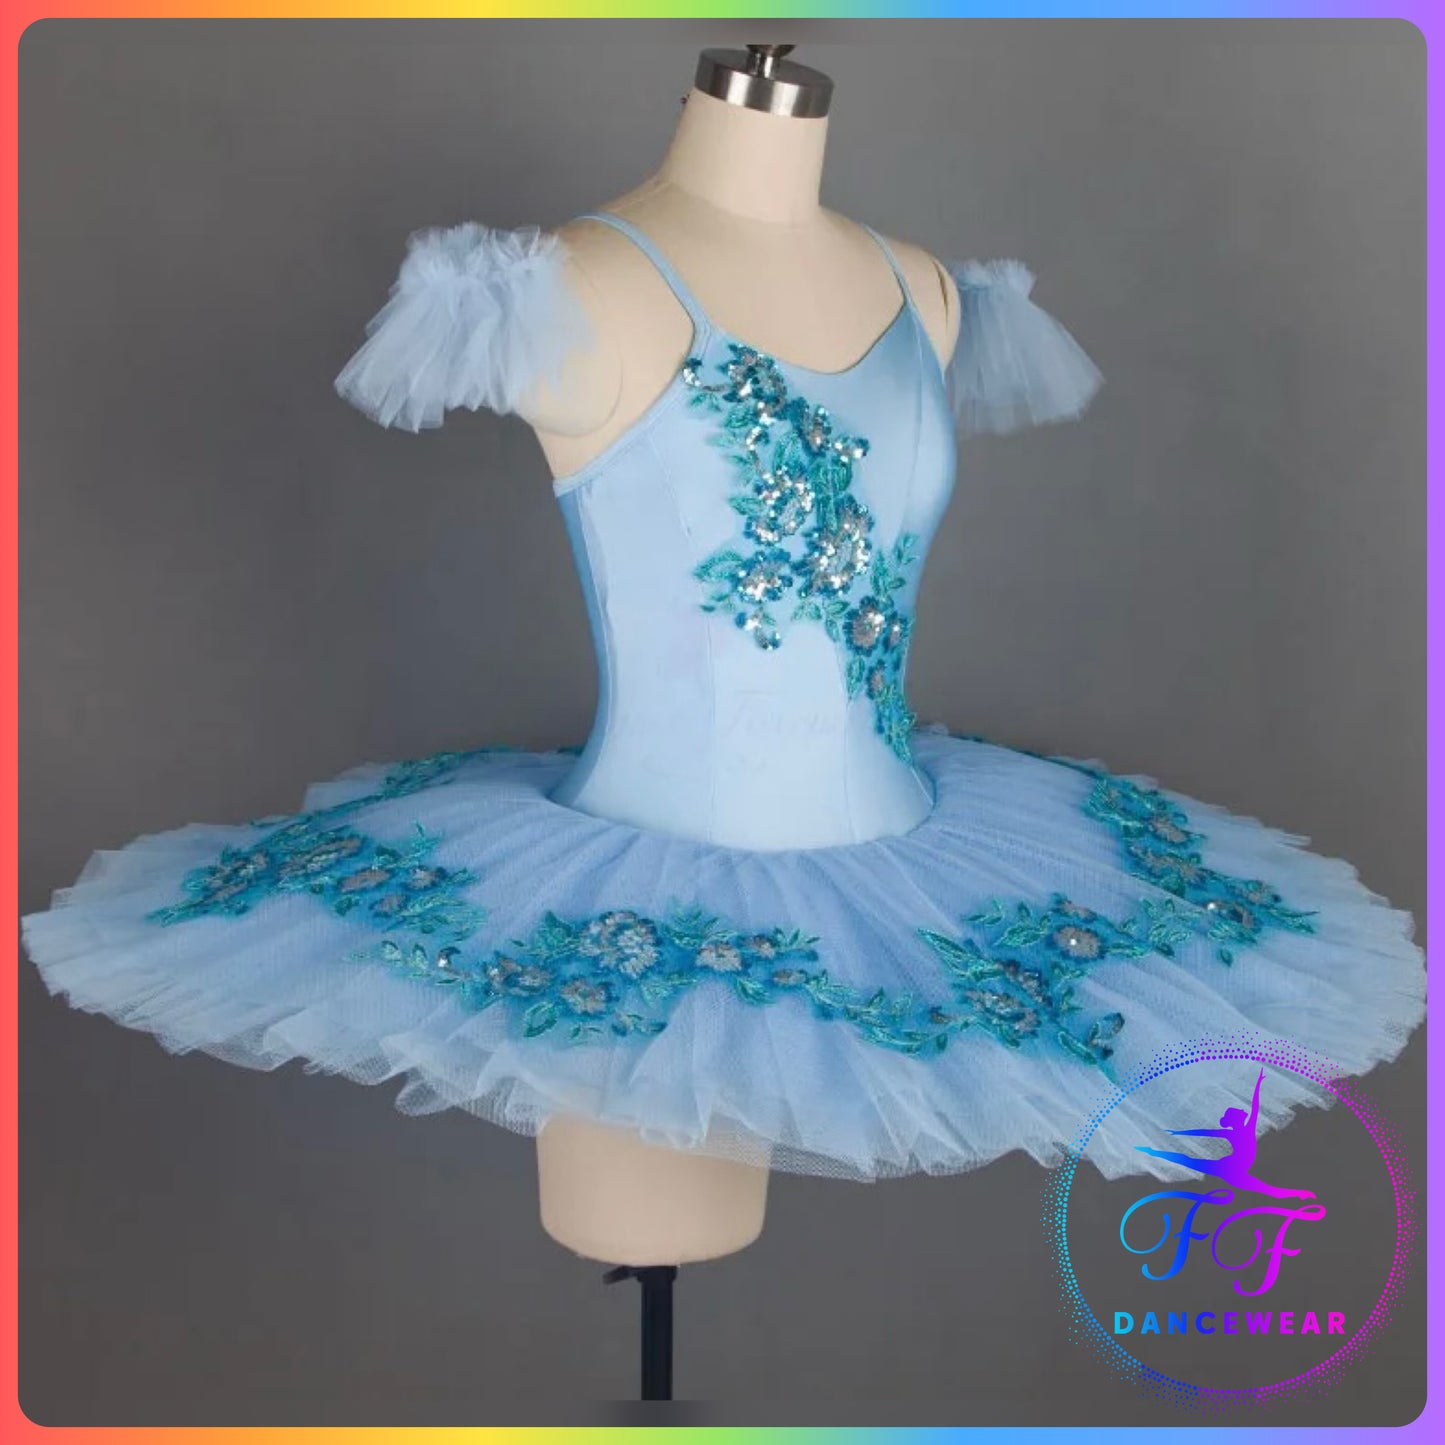 Blue Sequin Floral Stretch Professional Ballet Pancake Tutu (Child & Adult sizes)